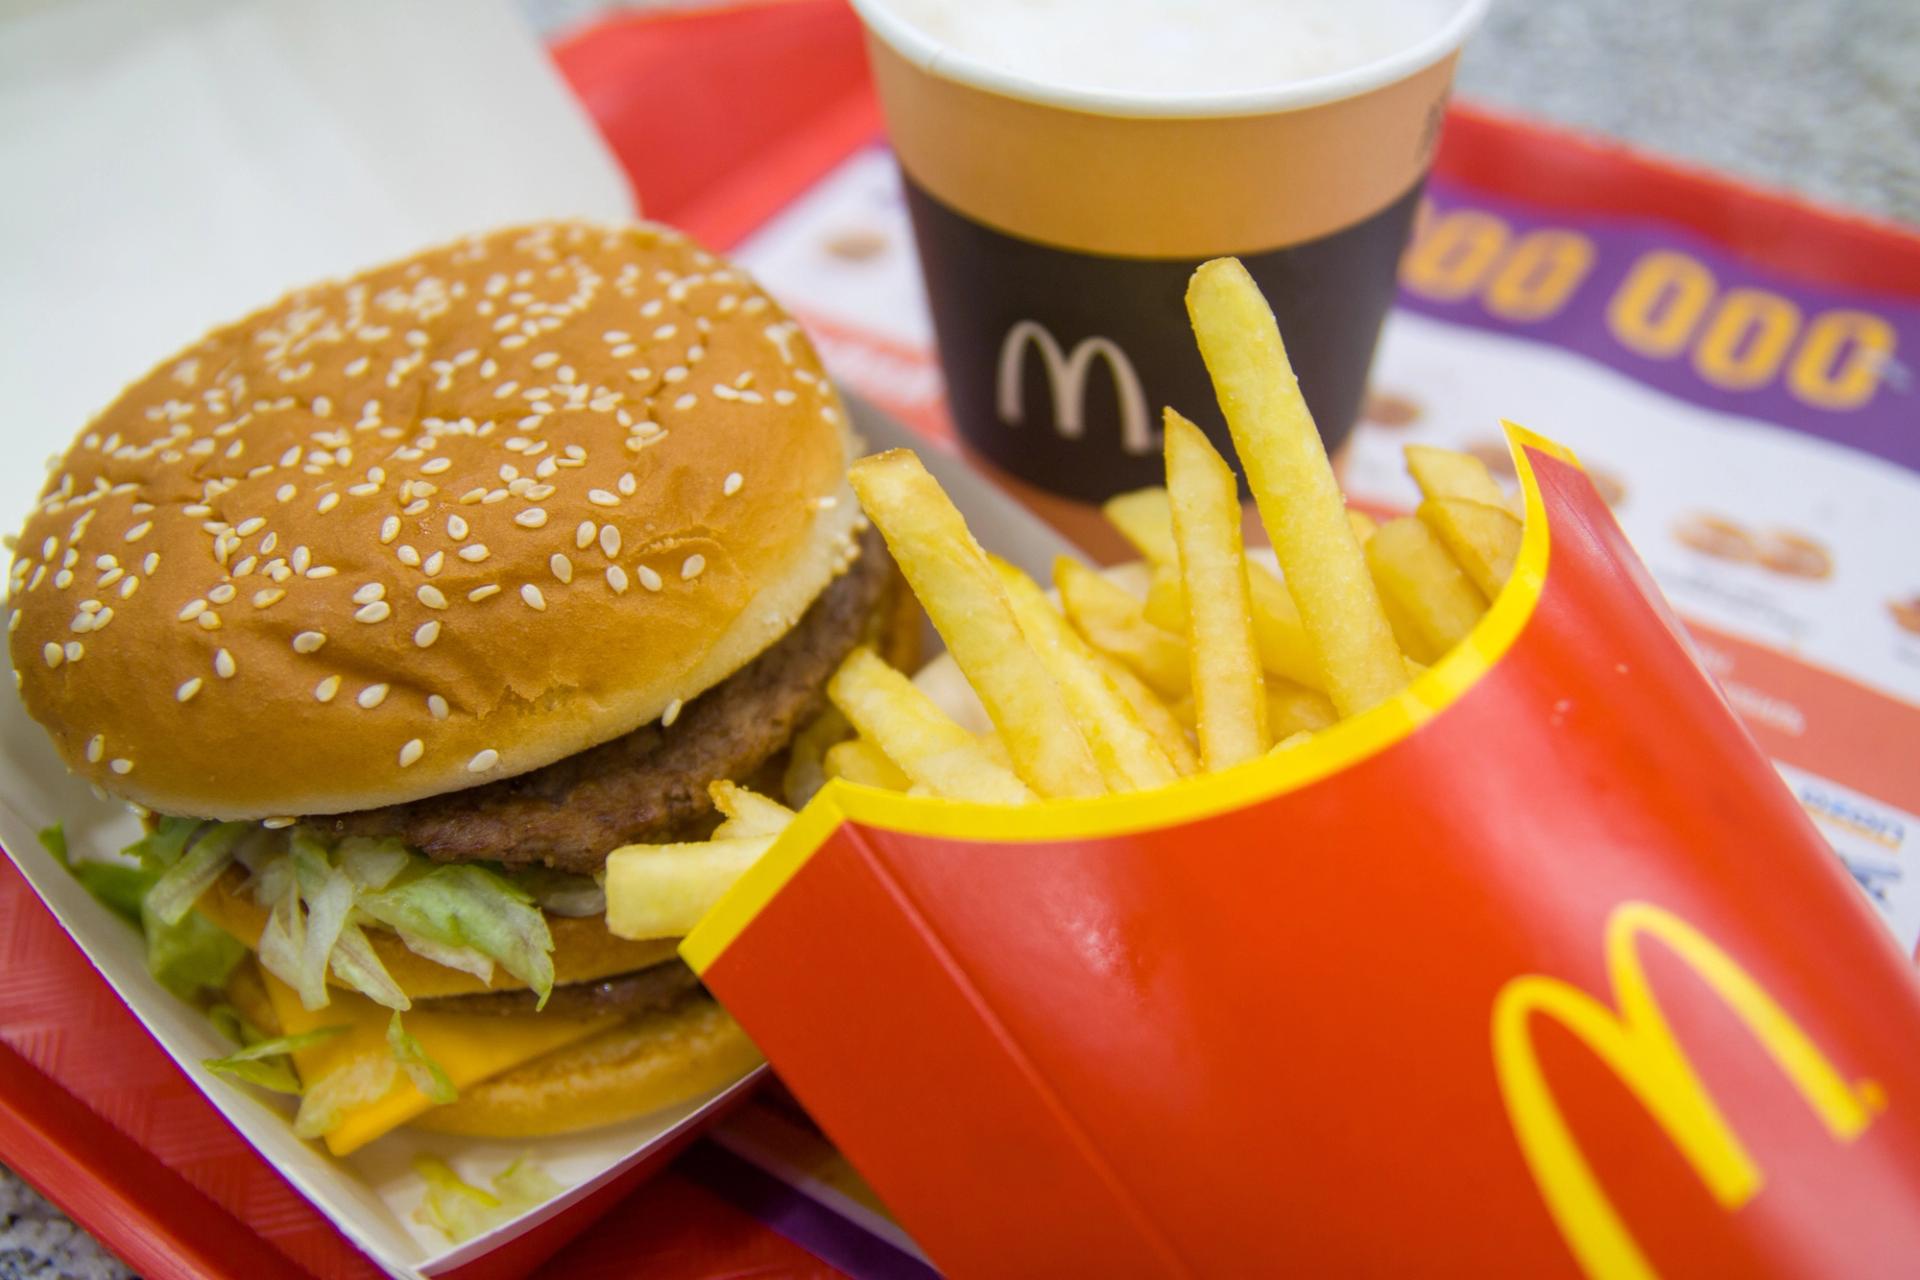 Savor the Classic Taste of a Juicy, Beefy McDonald's Burger